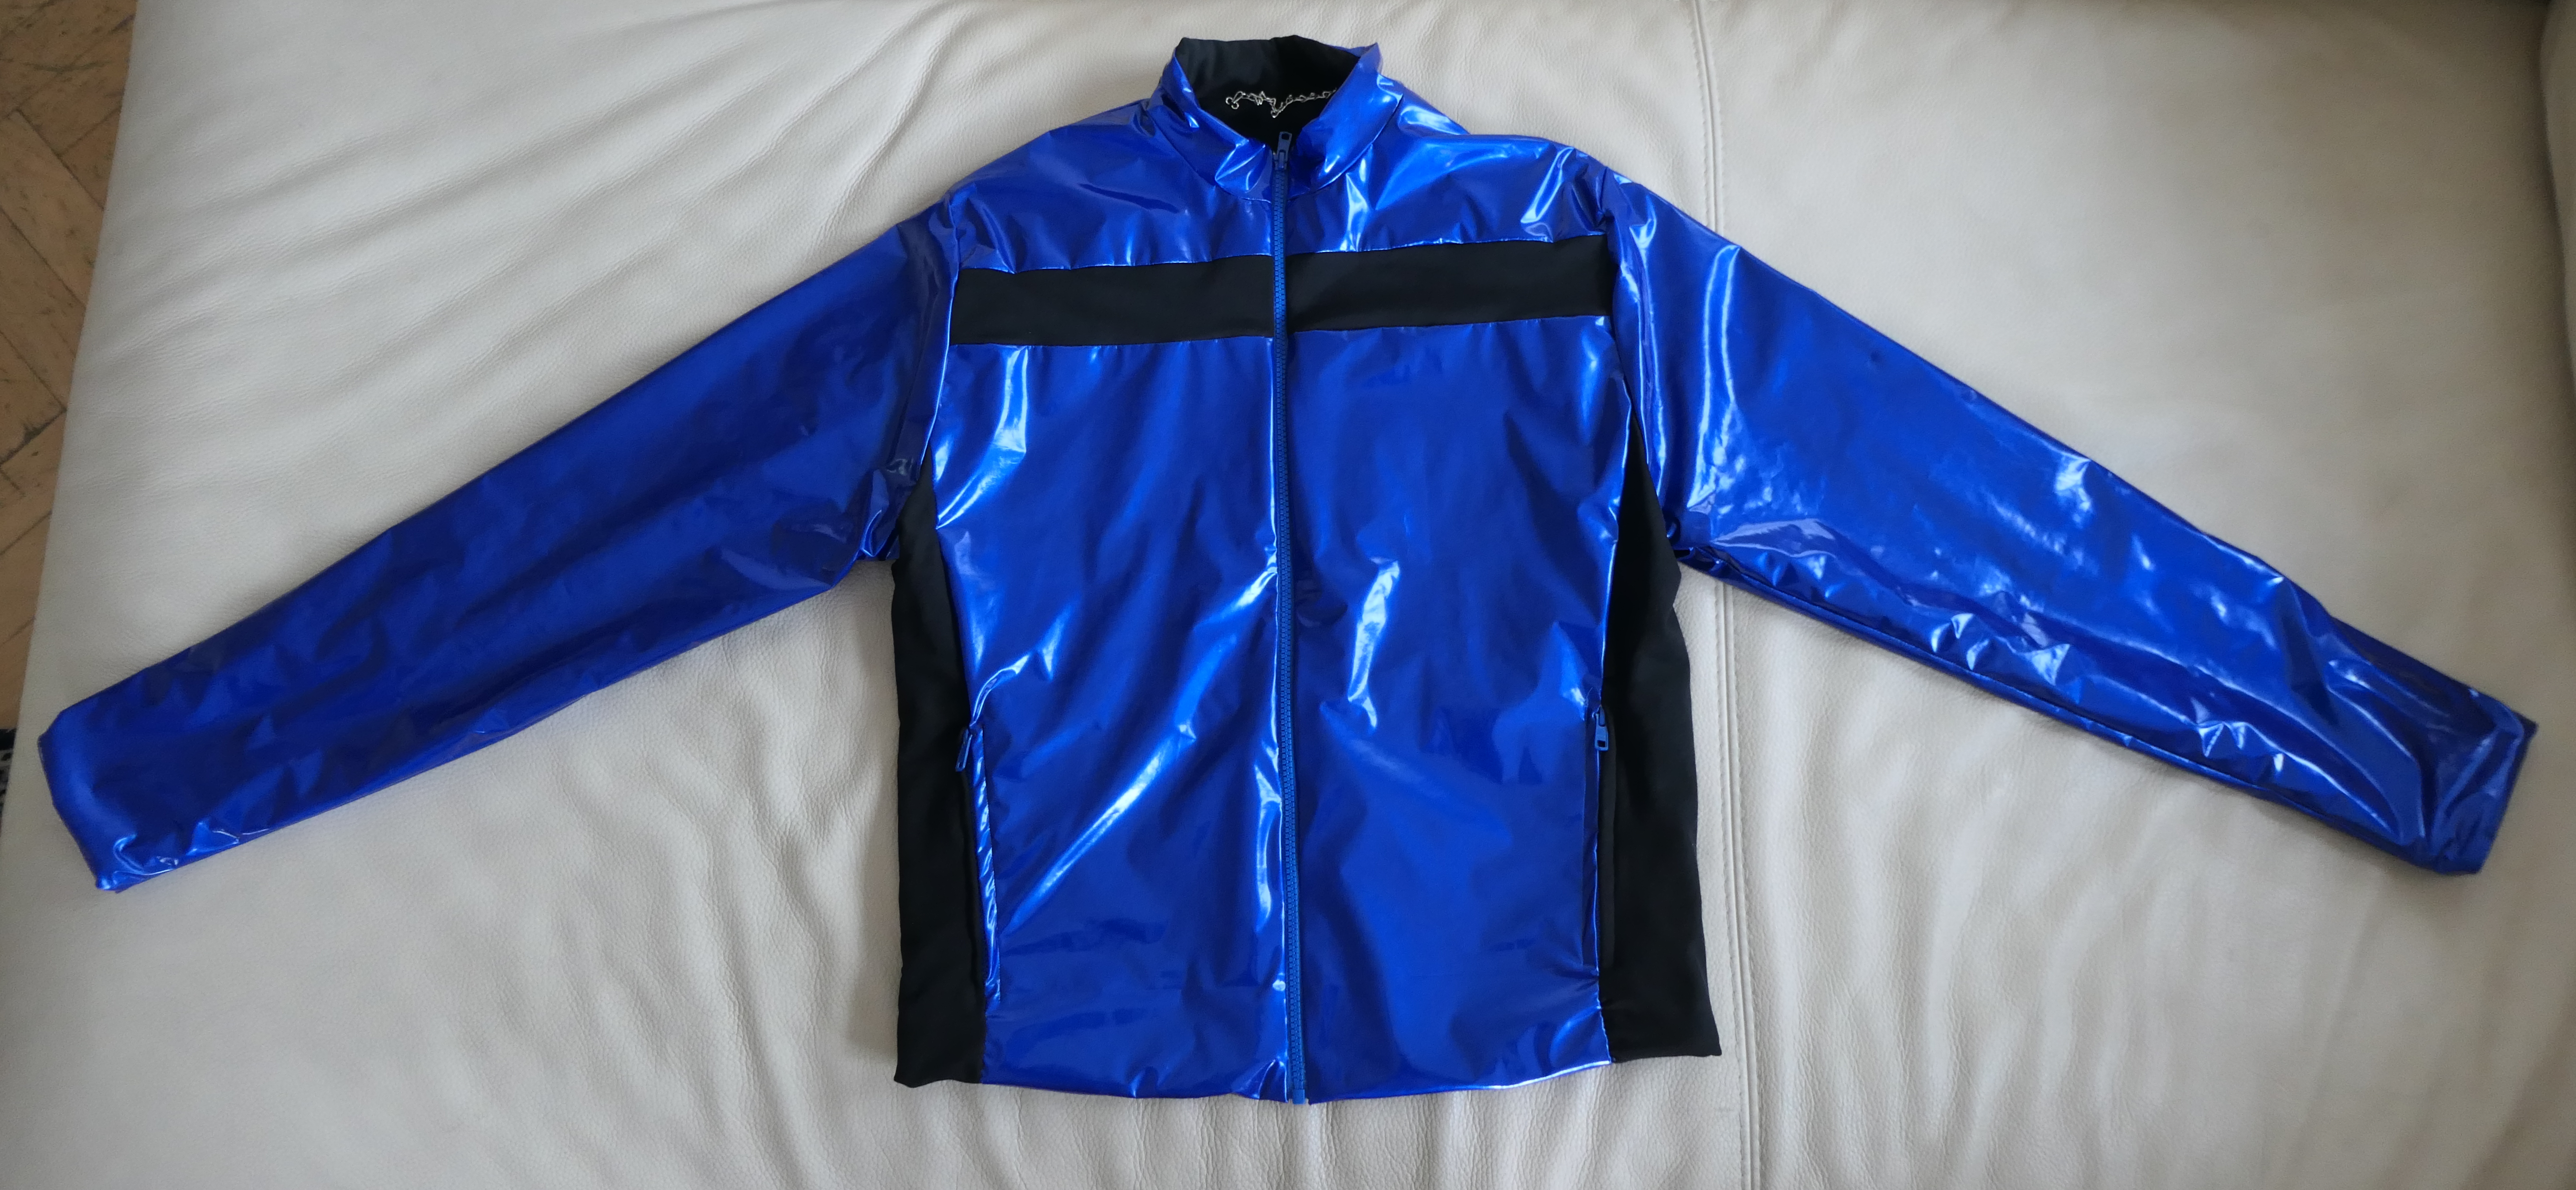 Electric Blue Jacket